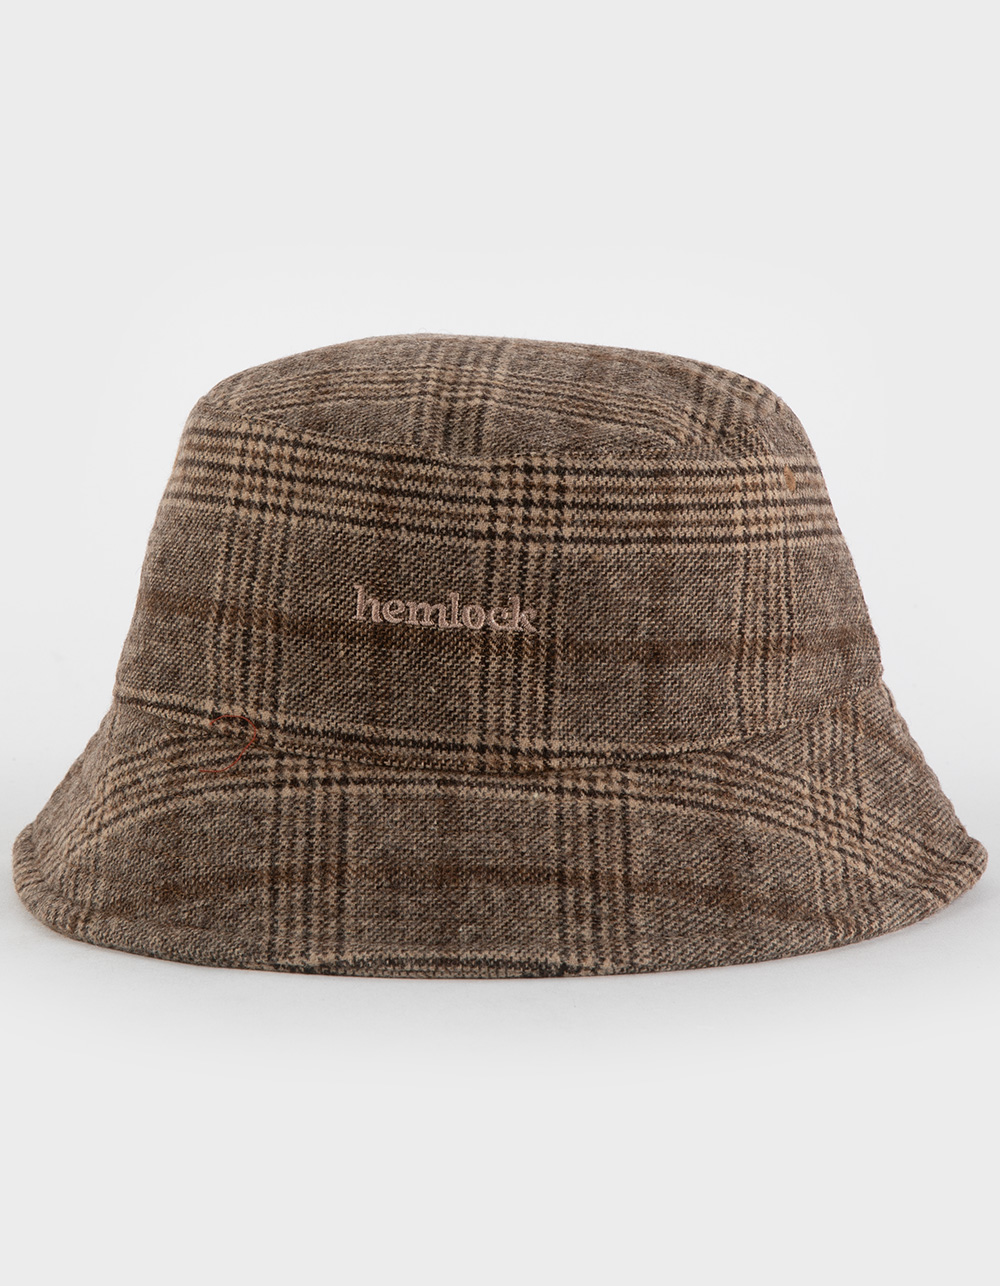 HEMLOCK HAT CO. Gable Bucket Hat